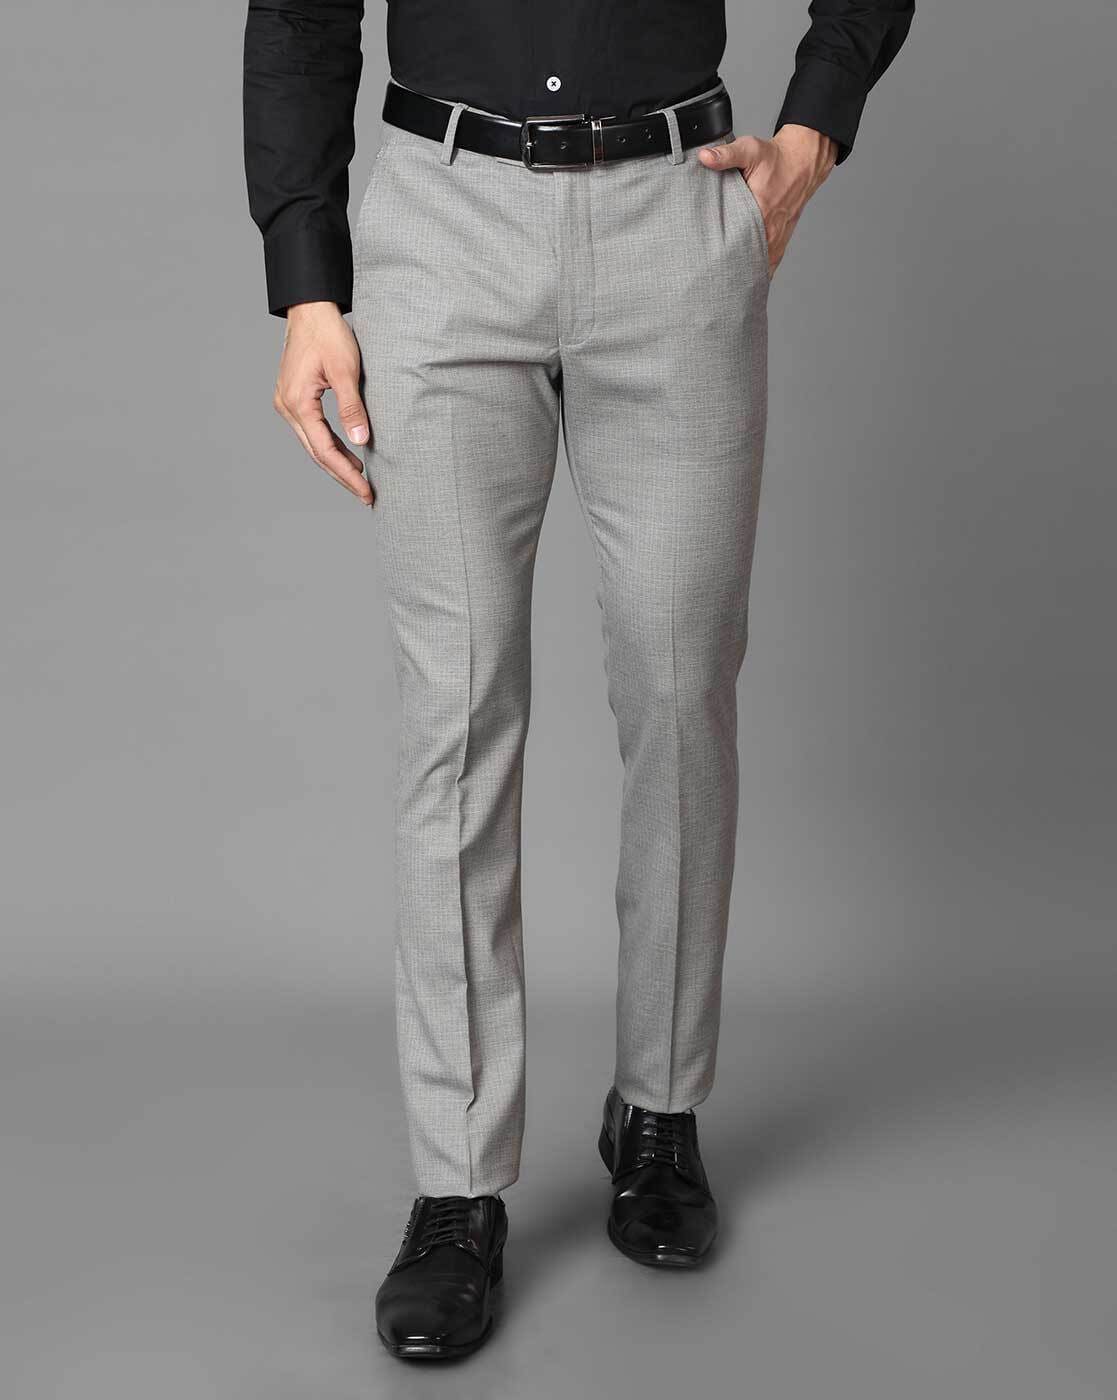 Slim Fit Mens Dress Pants Formal Slacks Flat Front No Pleats (Silver, 32 x  32) at Amazon Men's Clothing store